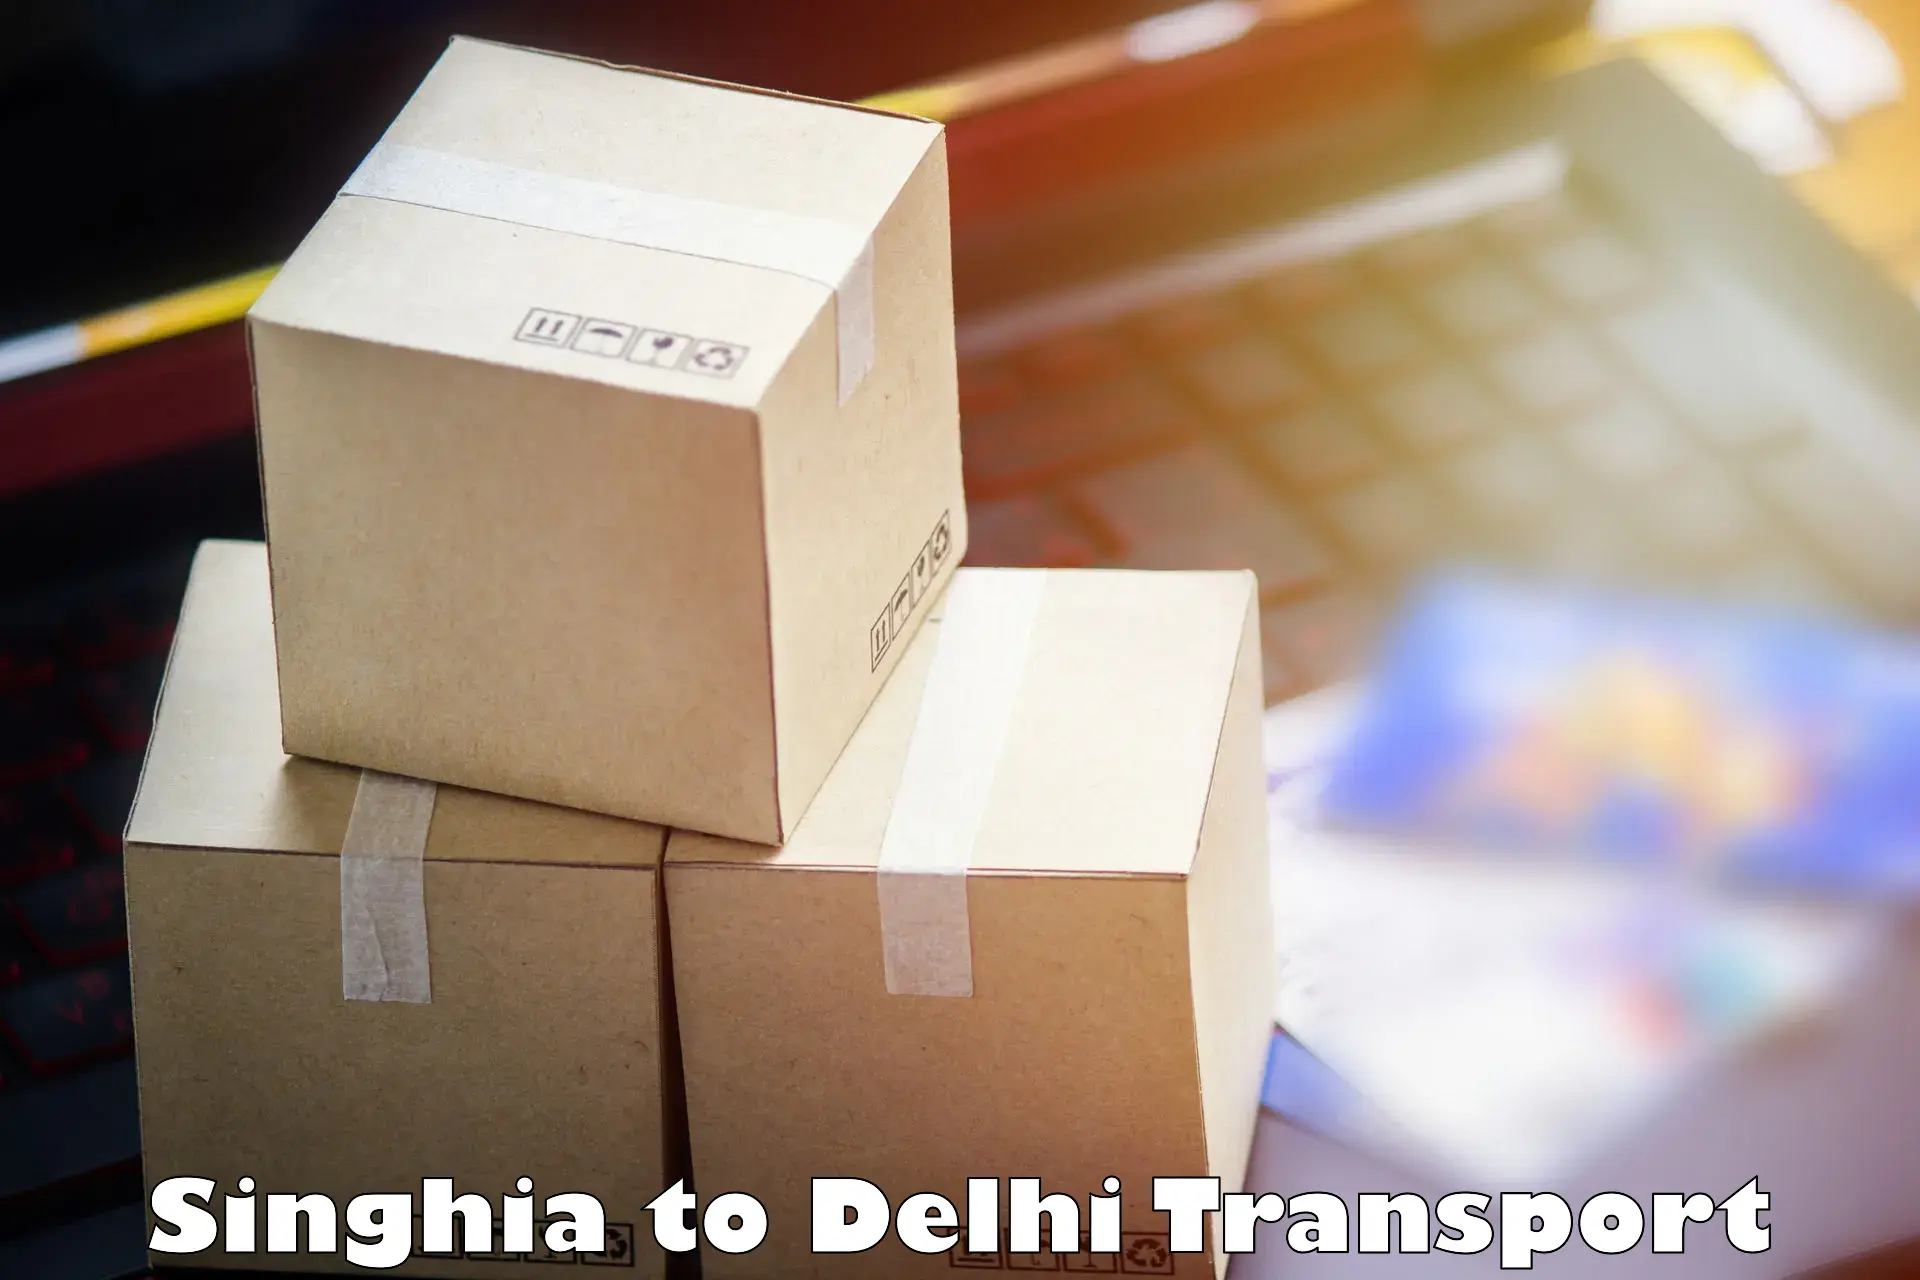 Goods delivery service Singhia to Delhi